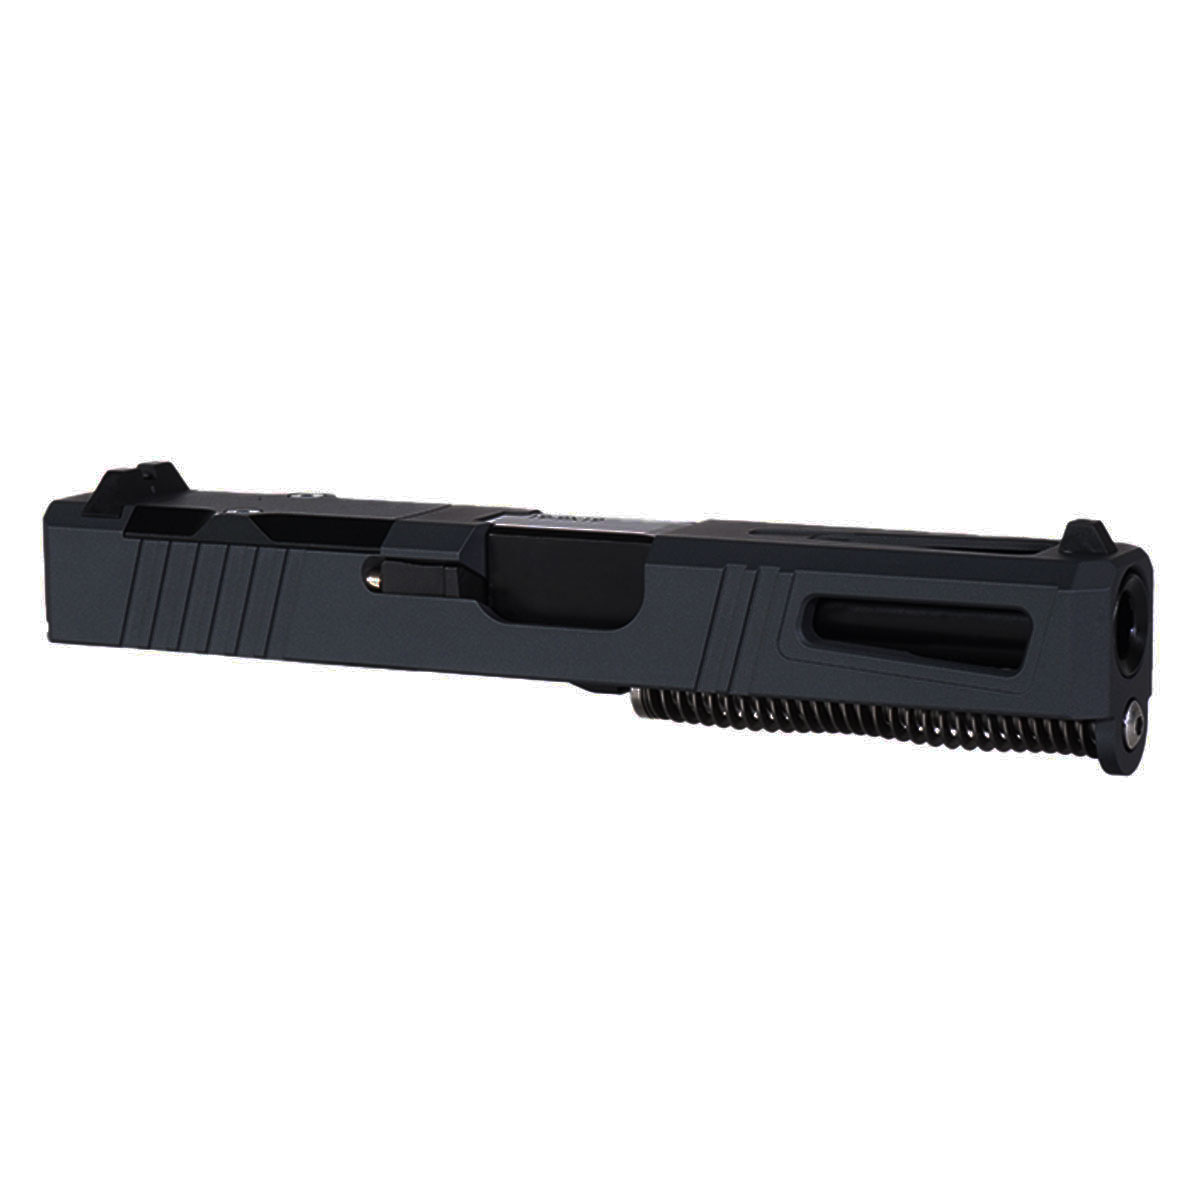 DDS 'Apollo' 9mm Complete Slide Kit - Glock 19 Gen 1-3 Compatible